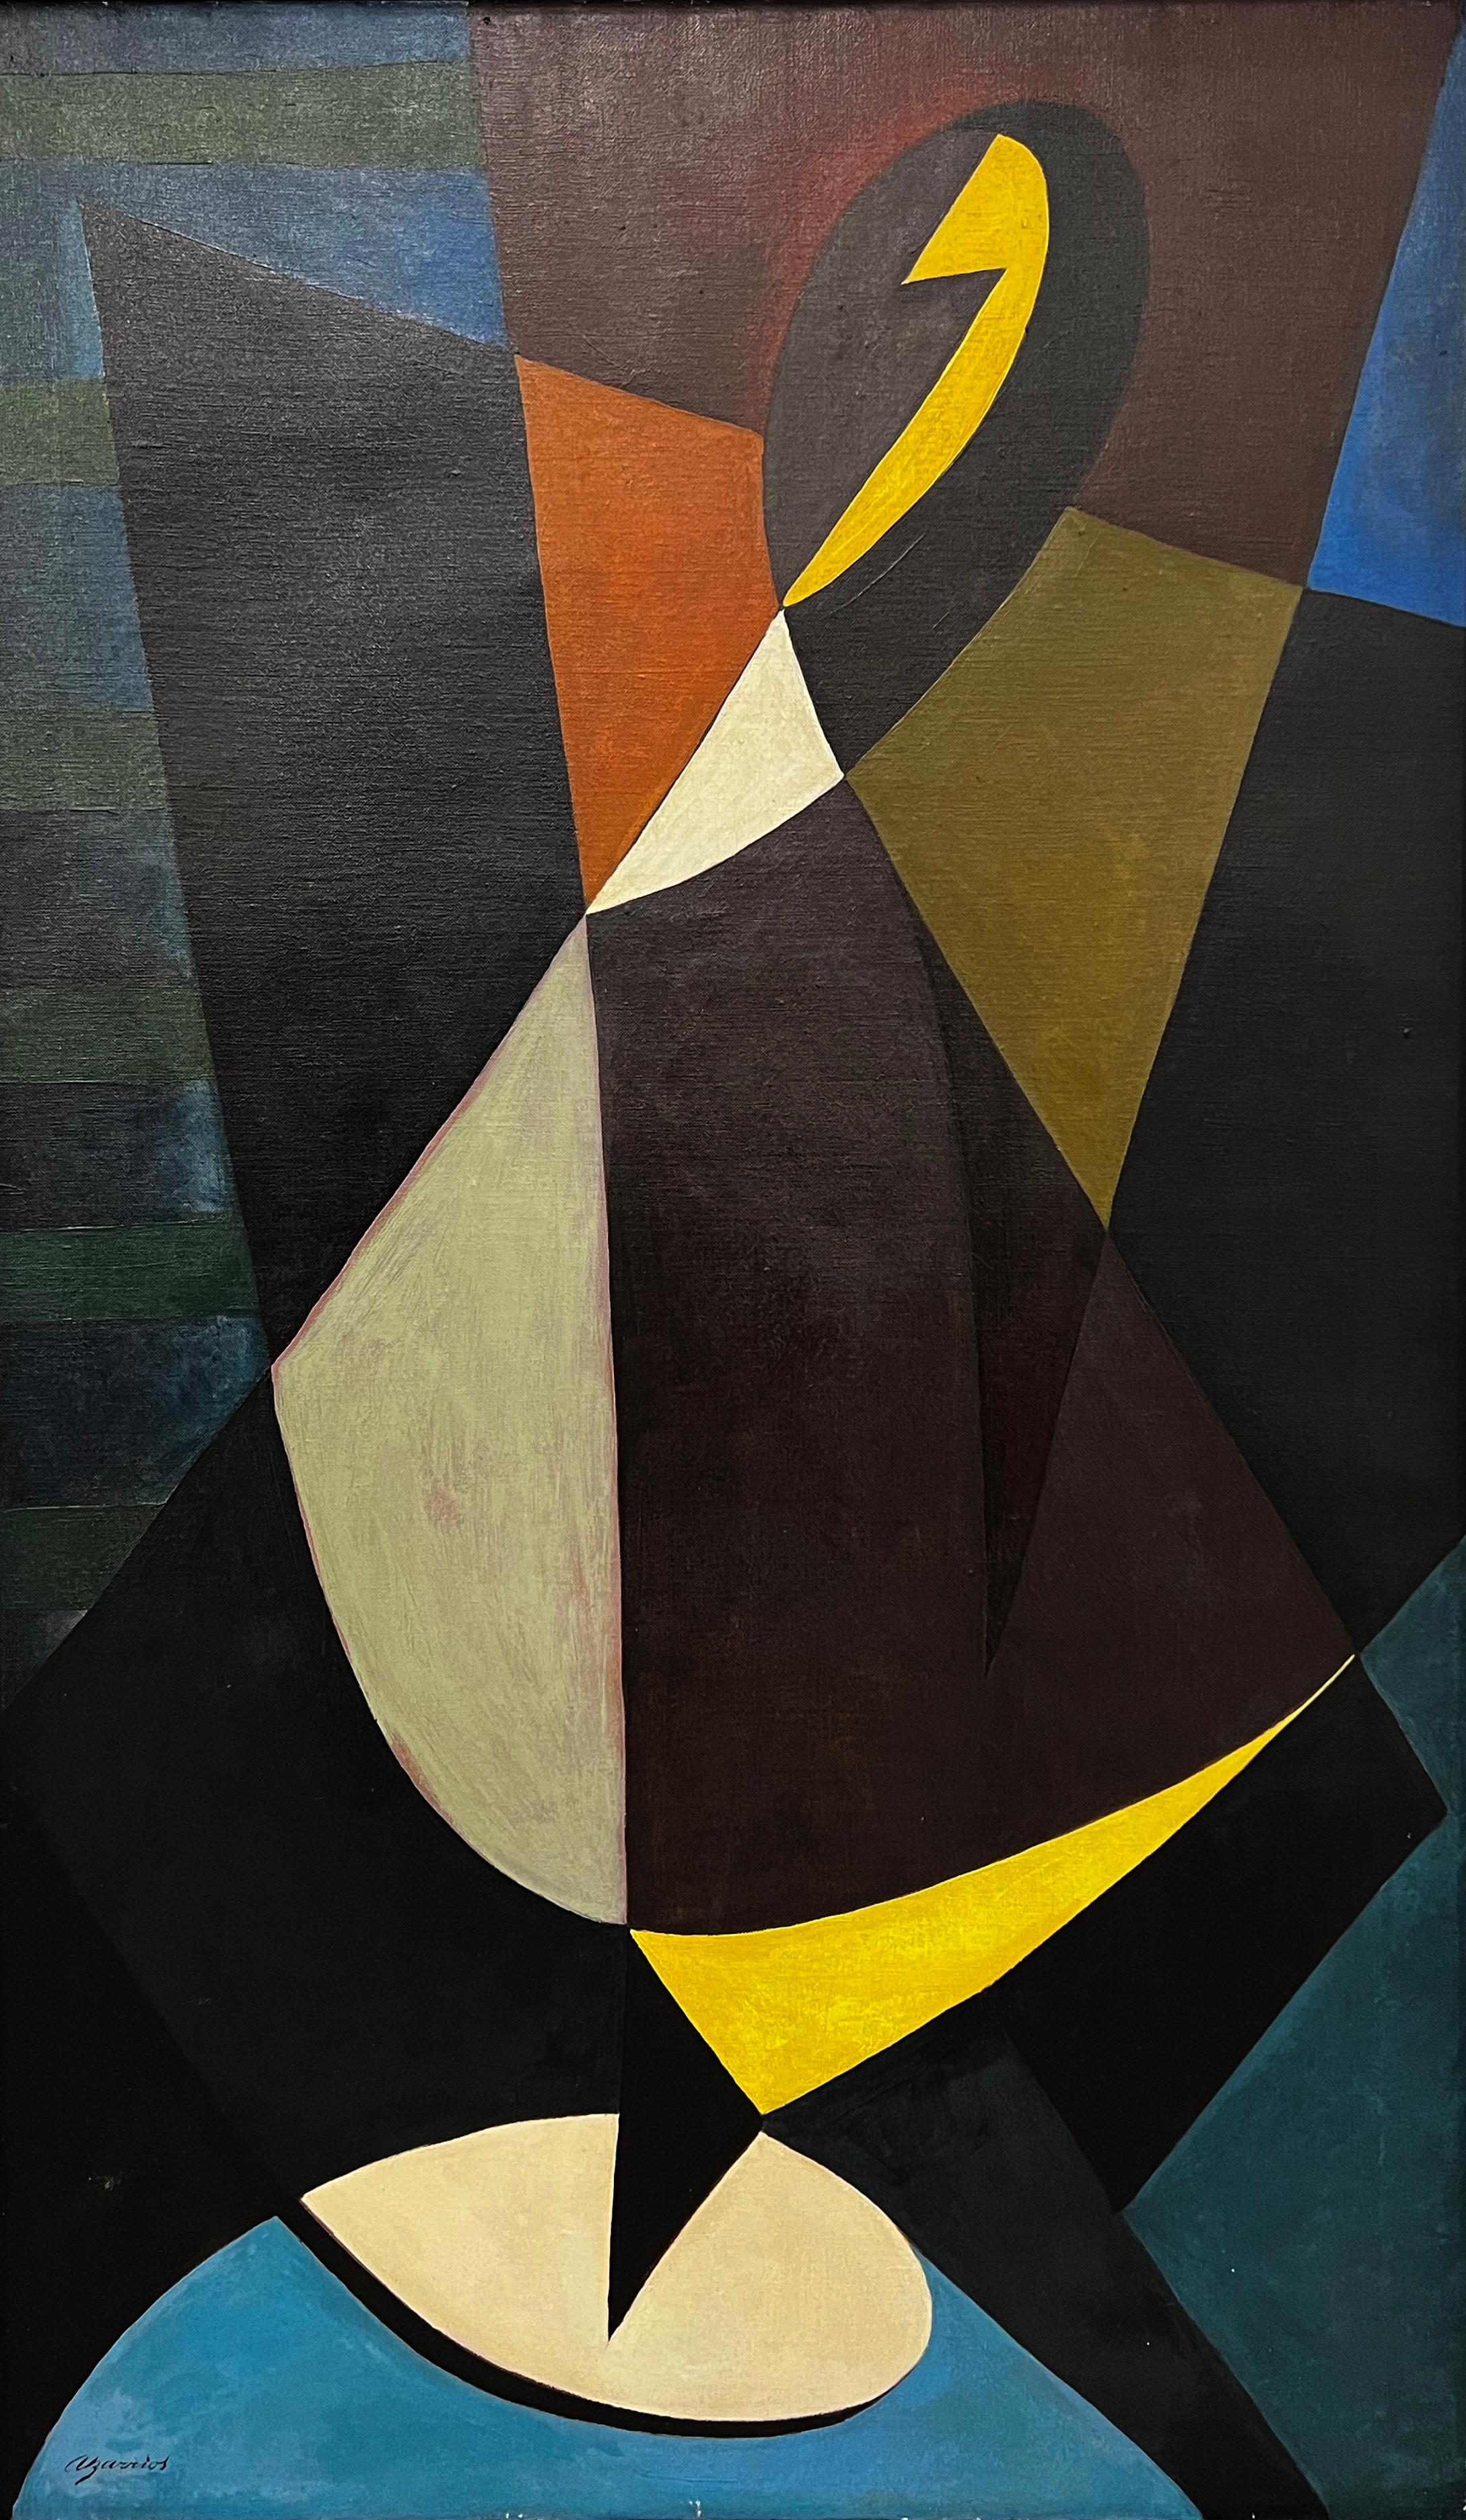 Armando Barrios, Composición XXVI, 1955, Öl auf Leinwand, 110 x 66 cm